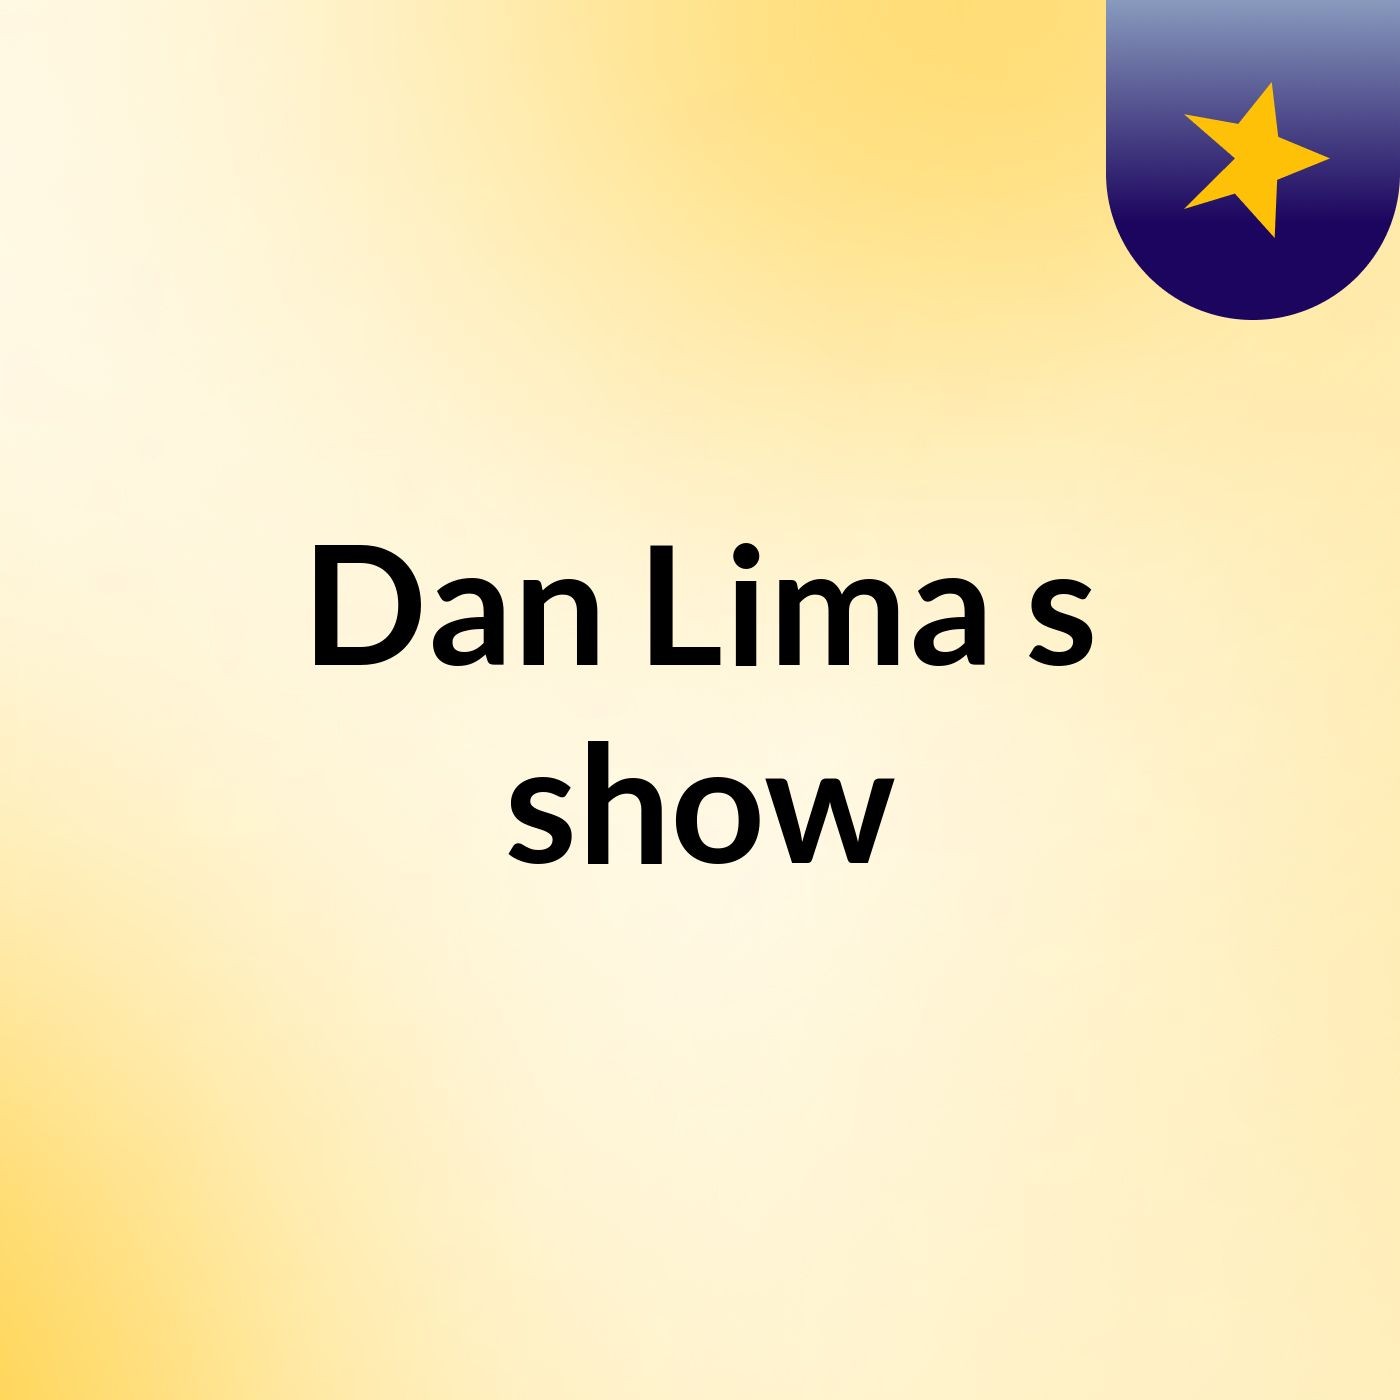 Dan Lima's show